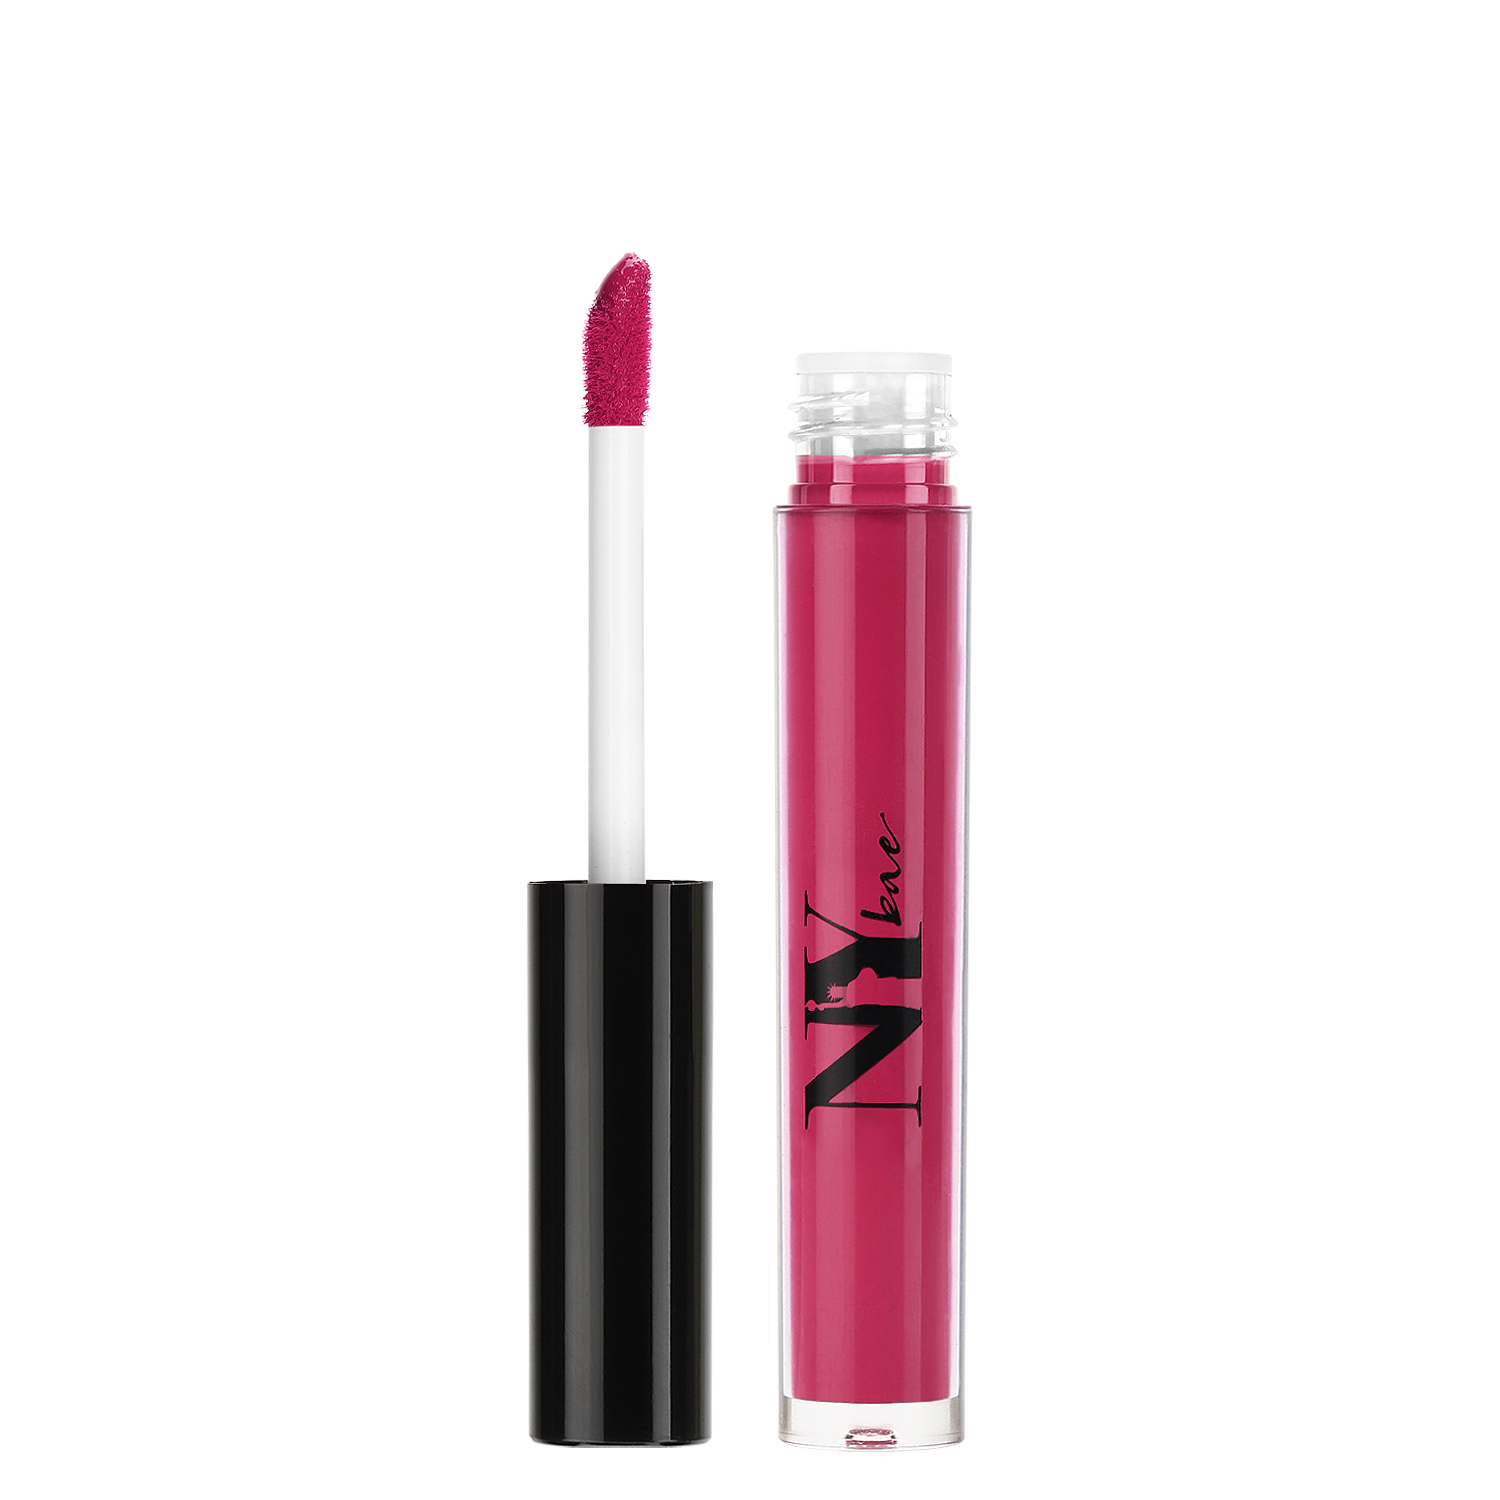 NY-Bae-moisturising-liquid-lipsticks-Carries-Big-Dream-27.